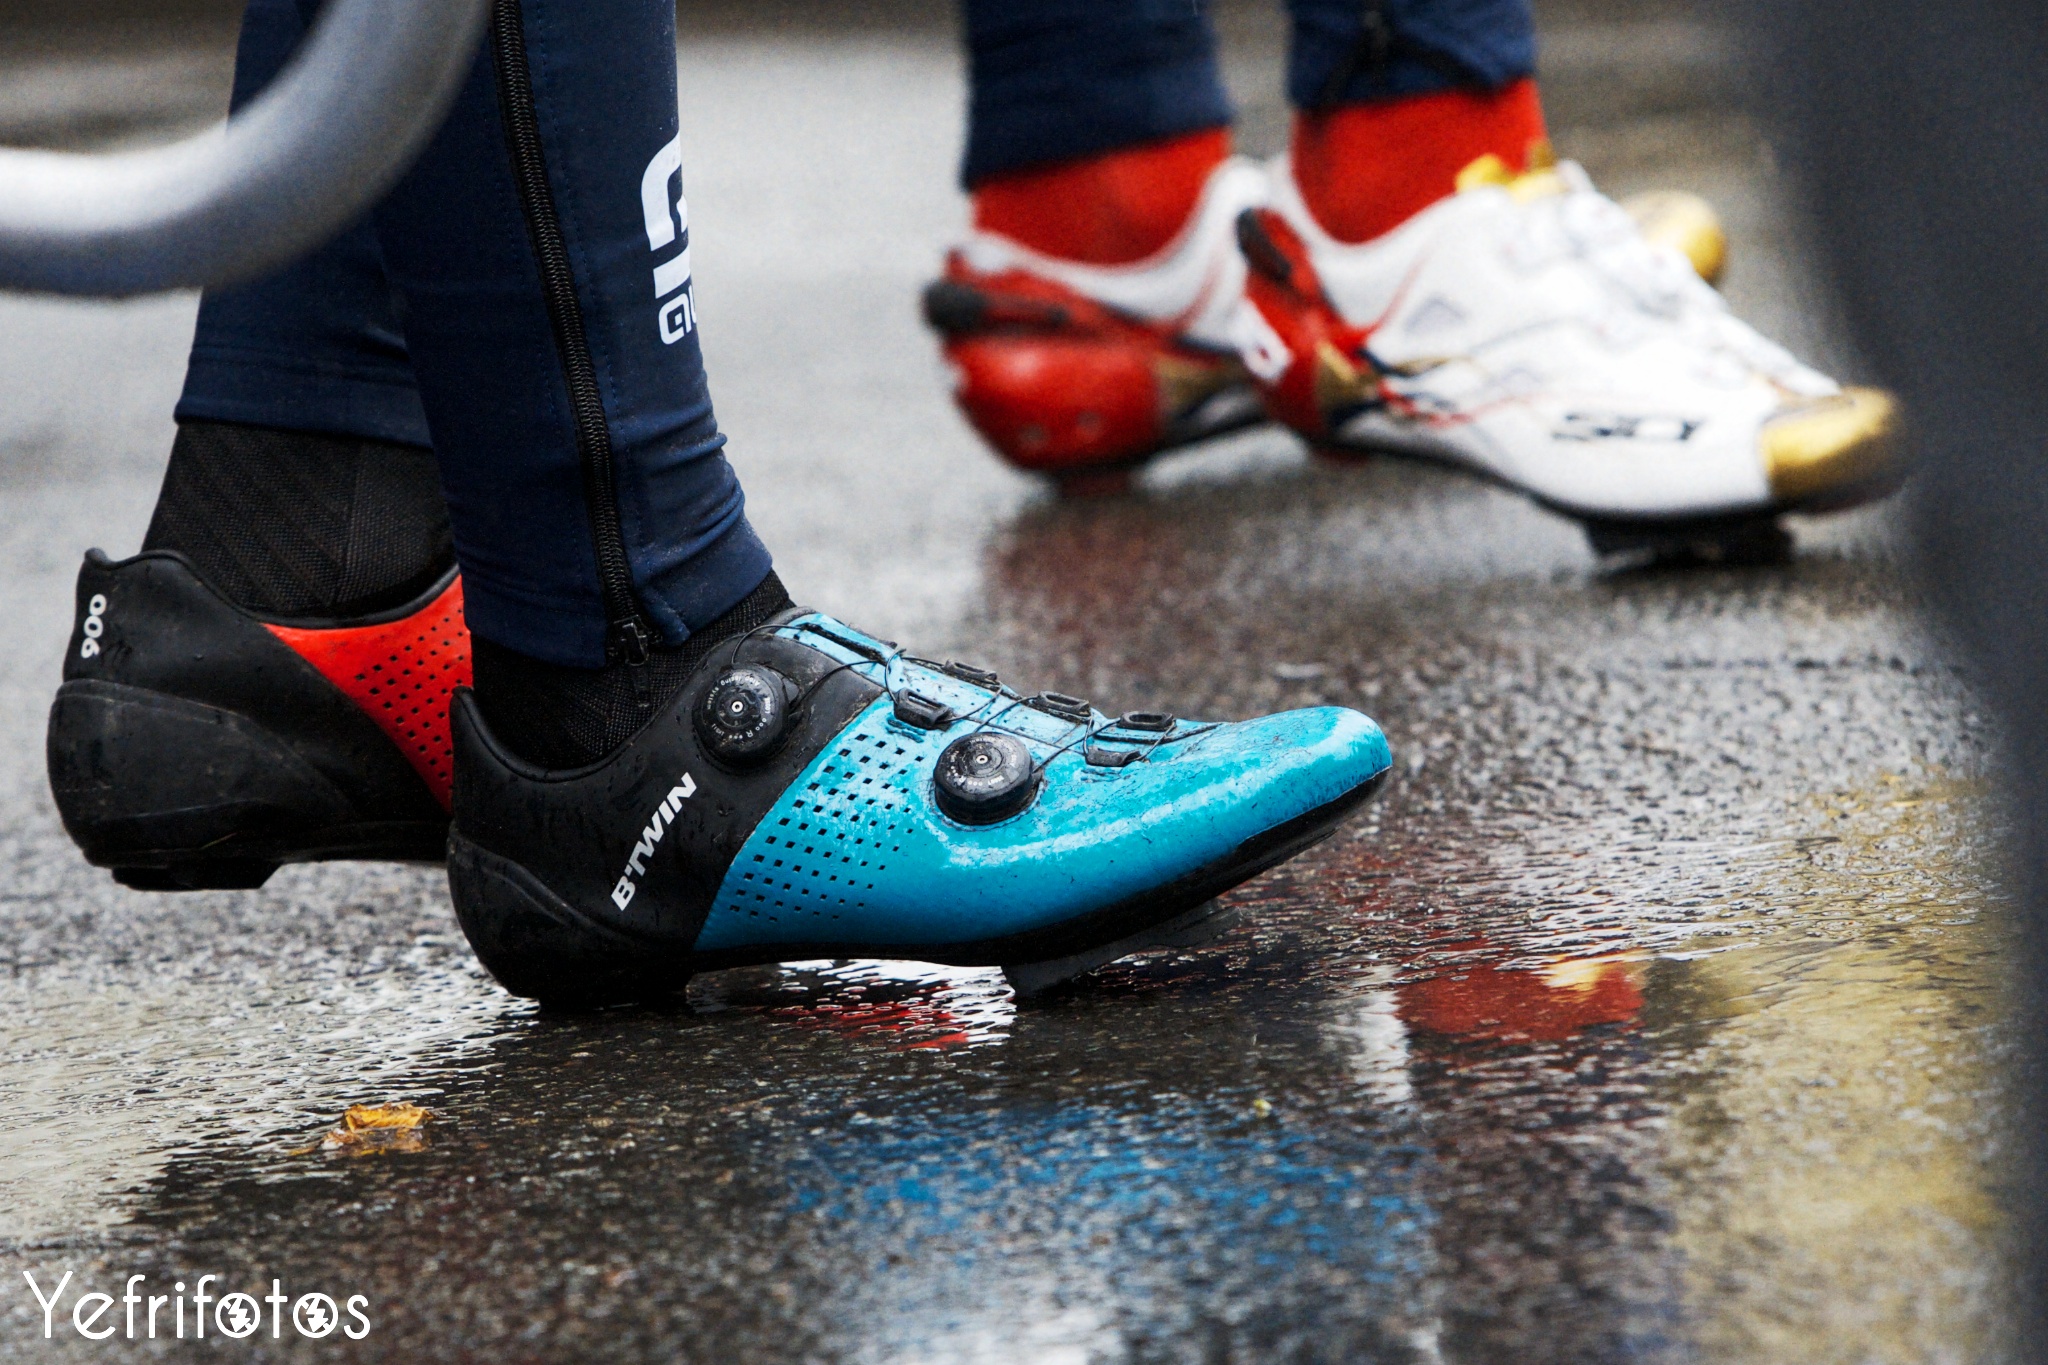 Chaussures BTWIN Paris Roubaix